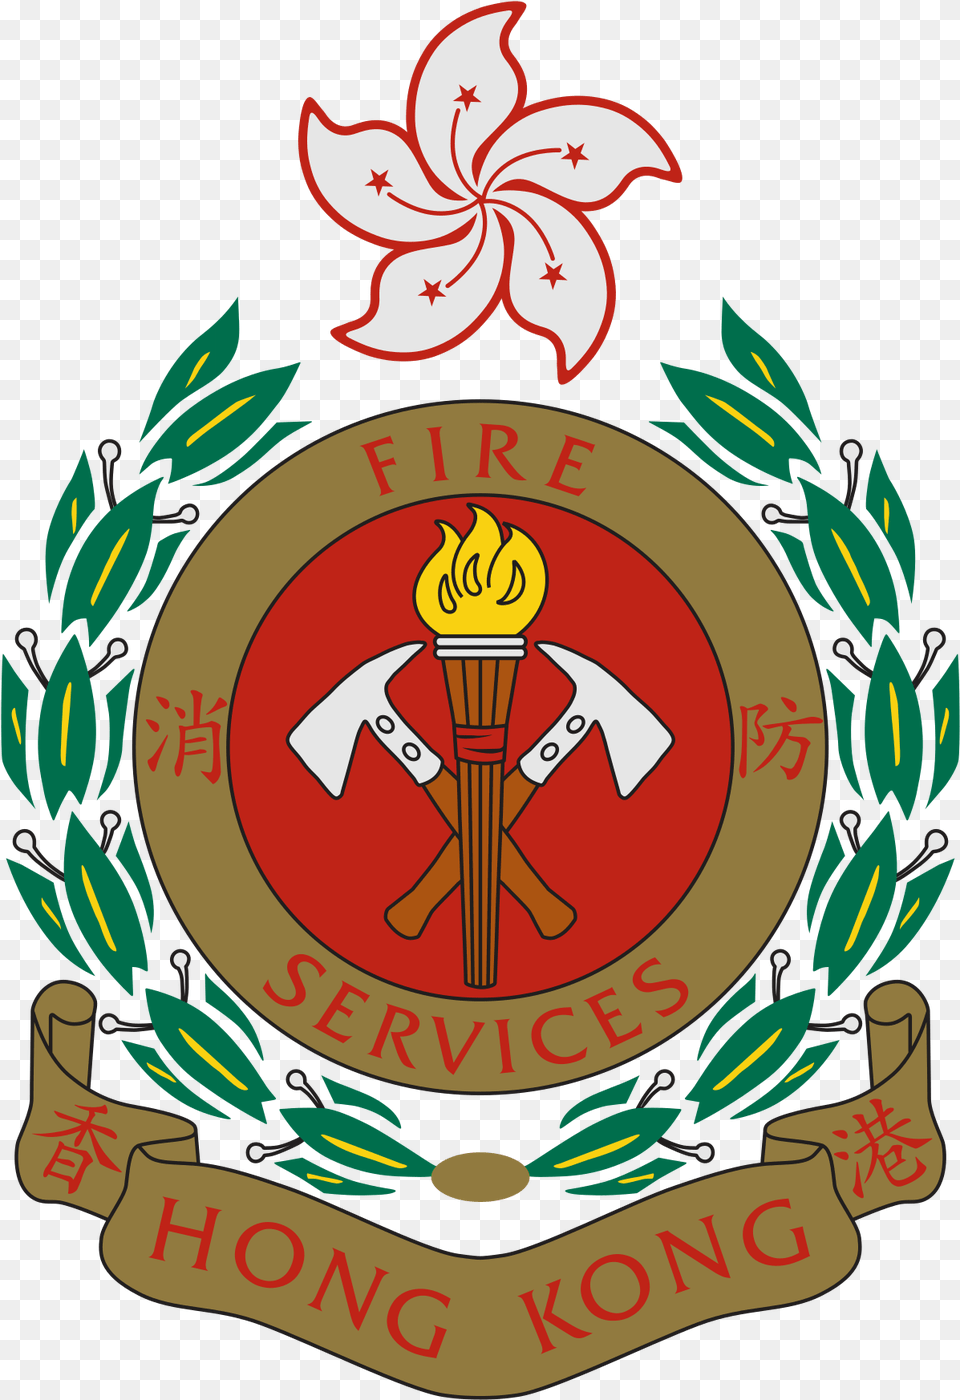 Hong Kong Fire Services Department Fire Services Department Logo, Emblem, Symbol, Dynamite, Weapon Free Png